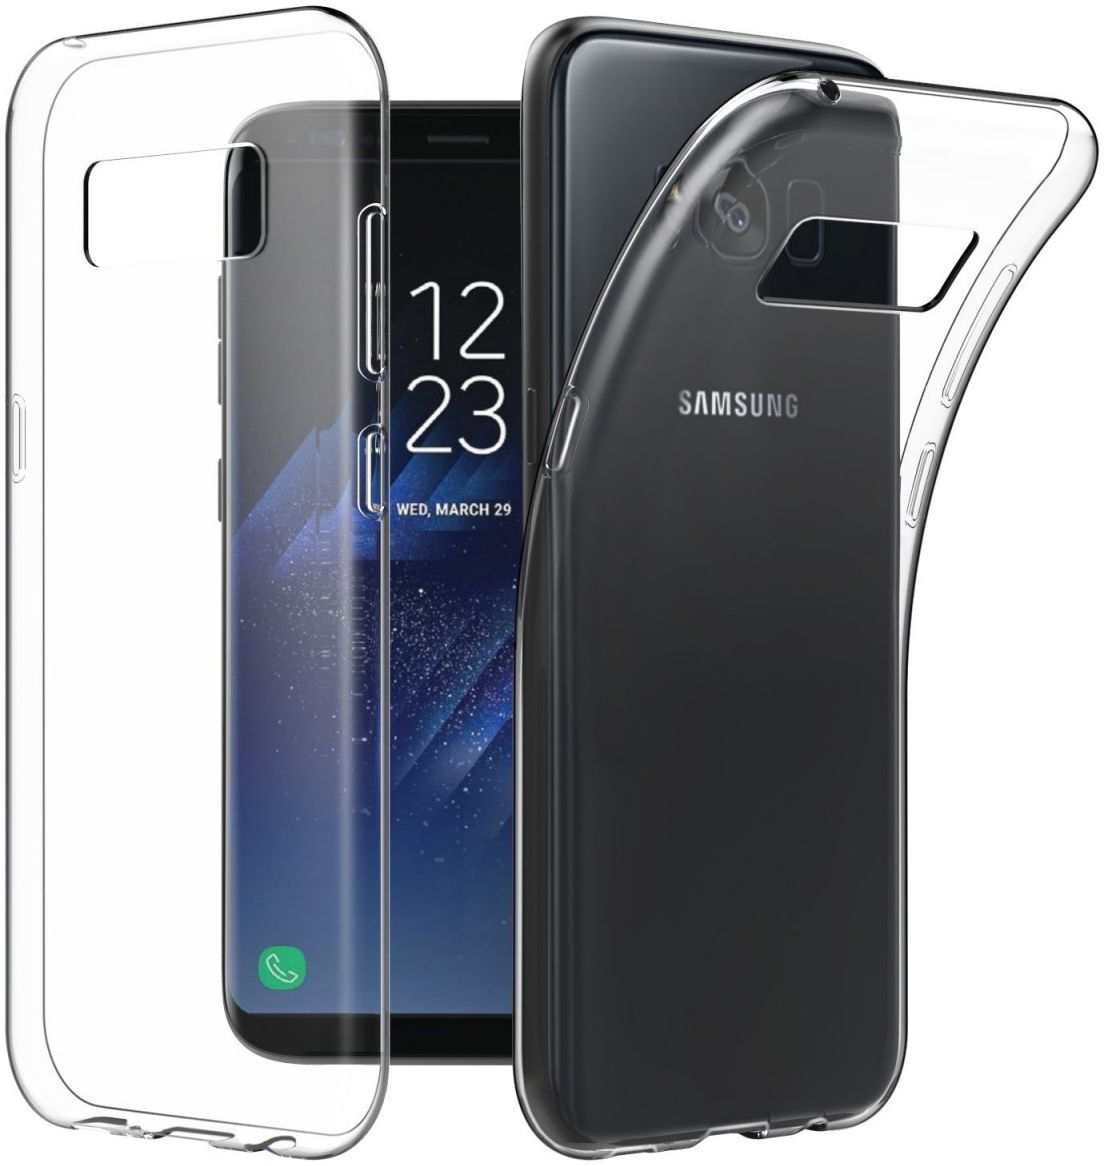 twist Bermad Landgoed Samsung Galaxy S8 Plus Transparant Hoesje – Leidsche Rijn Telecom